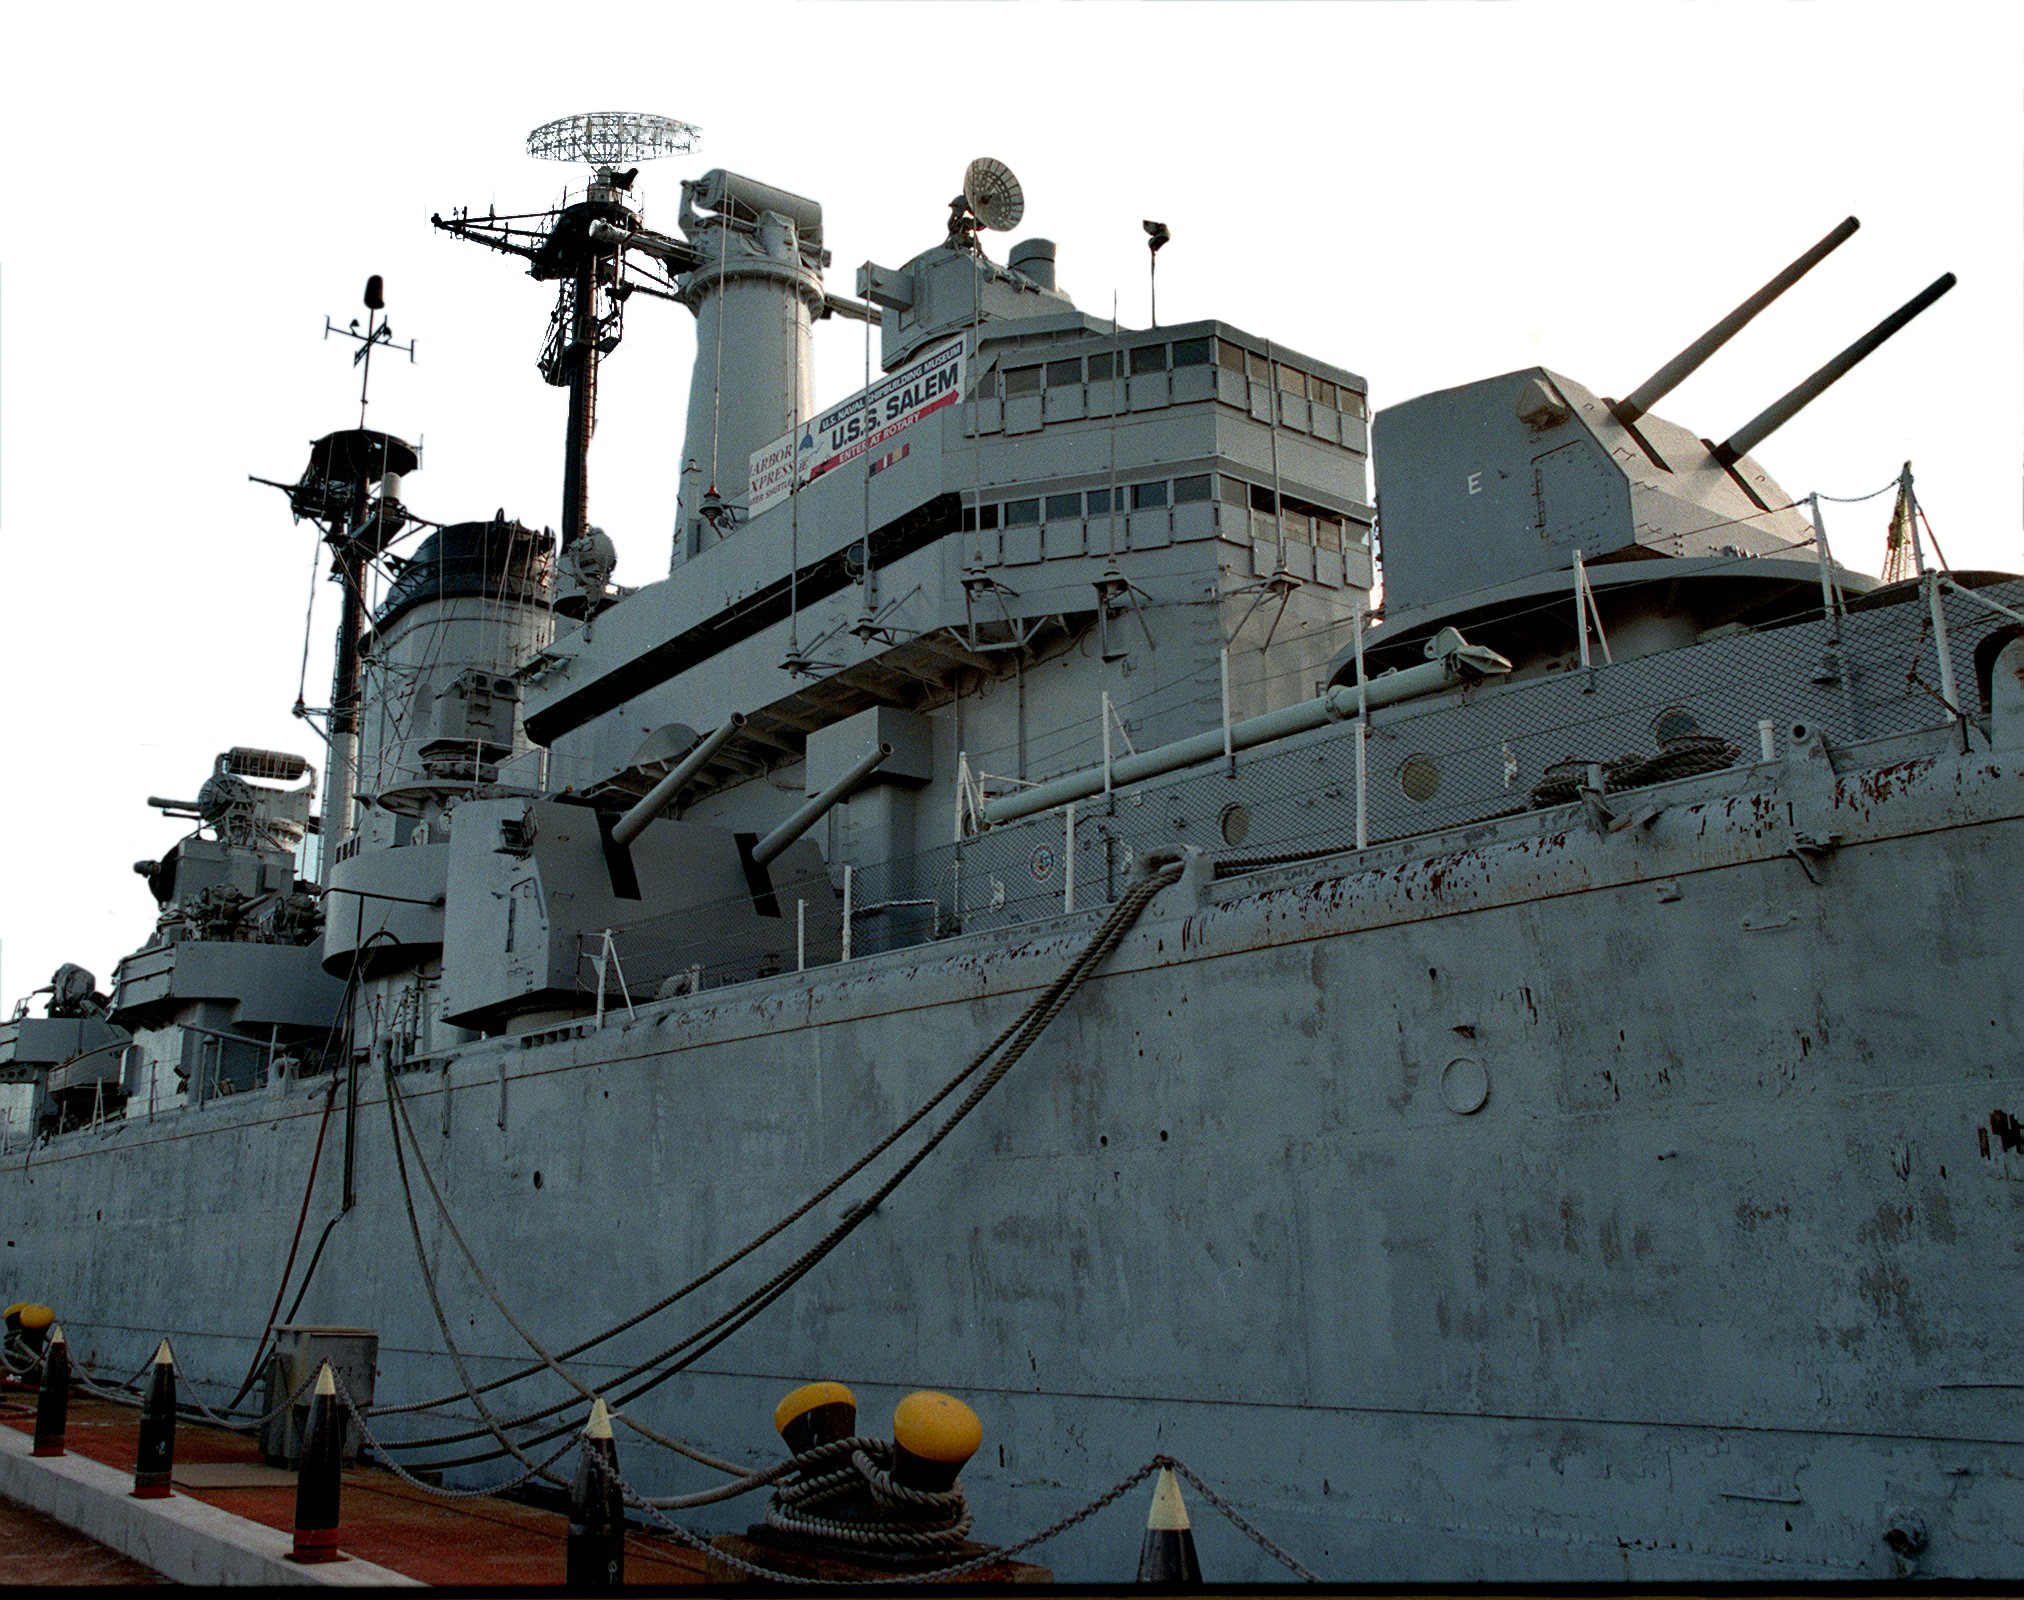 The United States Naval Shipbuilding Museum & USS Salem